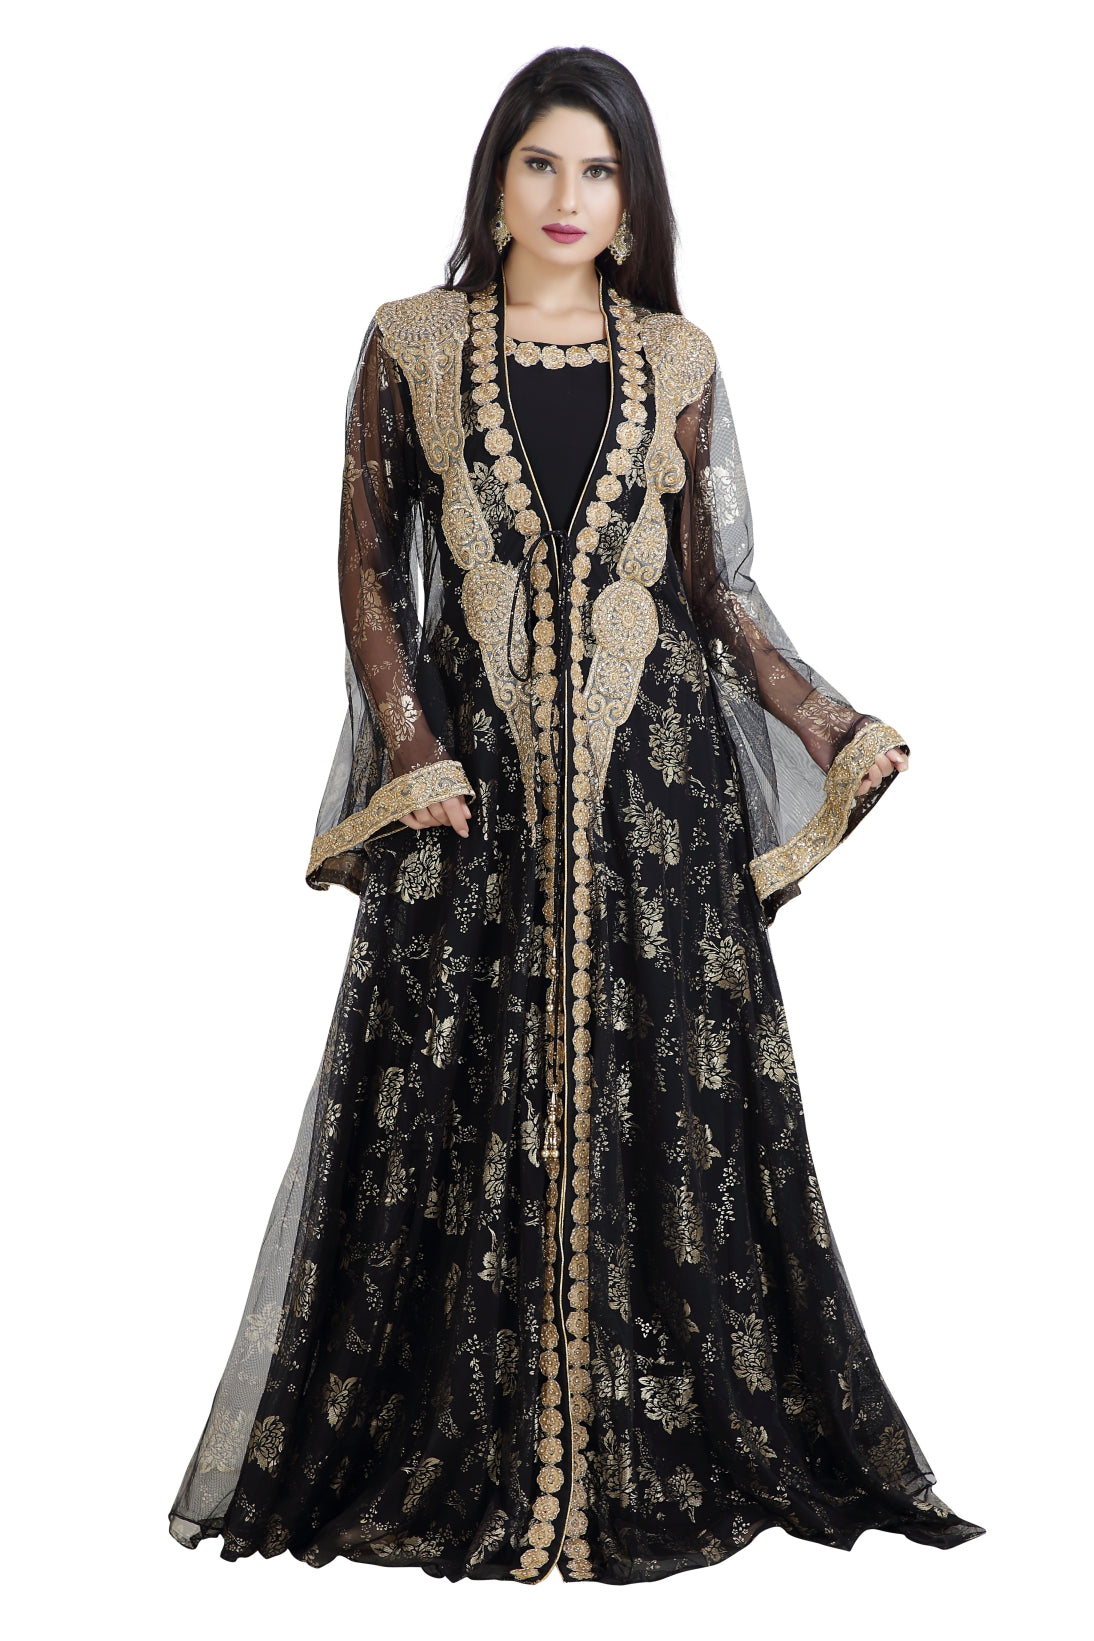 Net Anarkali Suit and Gown Design/ Net Anarkali Dress Design Images/ Net  Anarkali Dress - YouTube